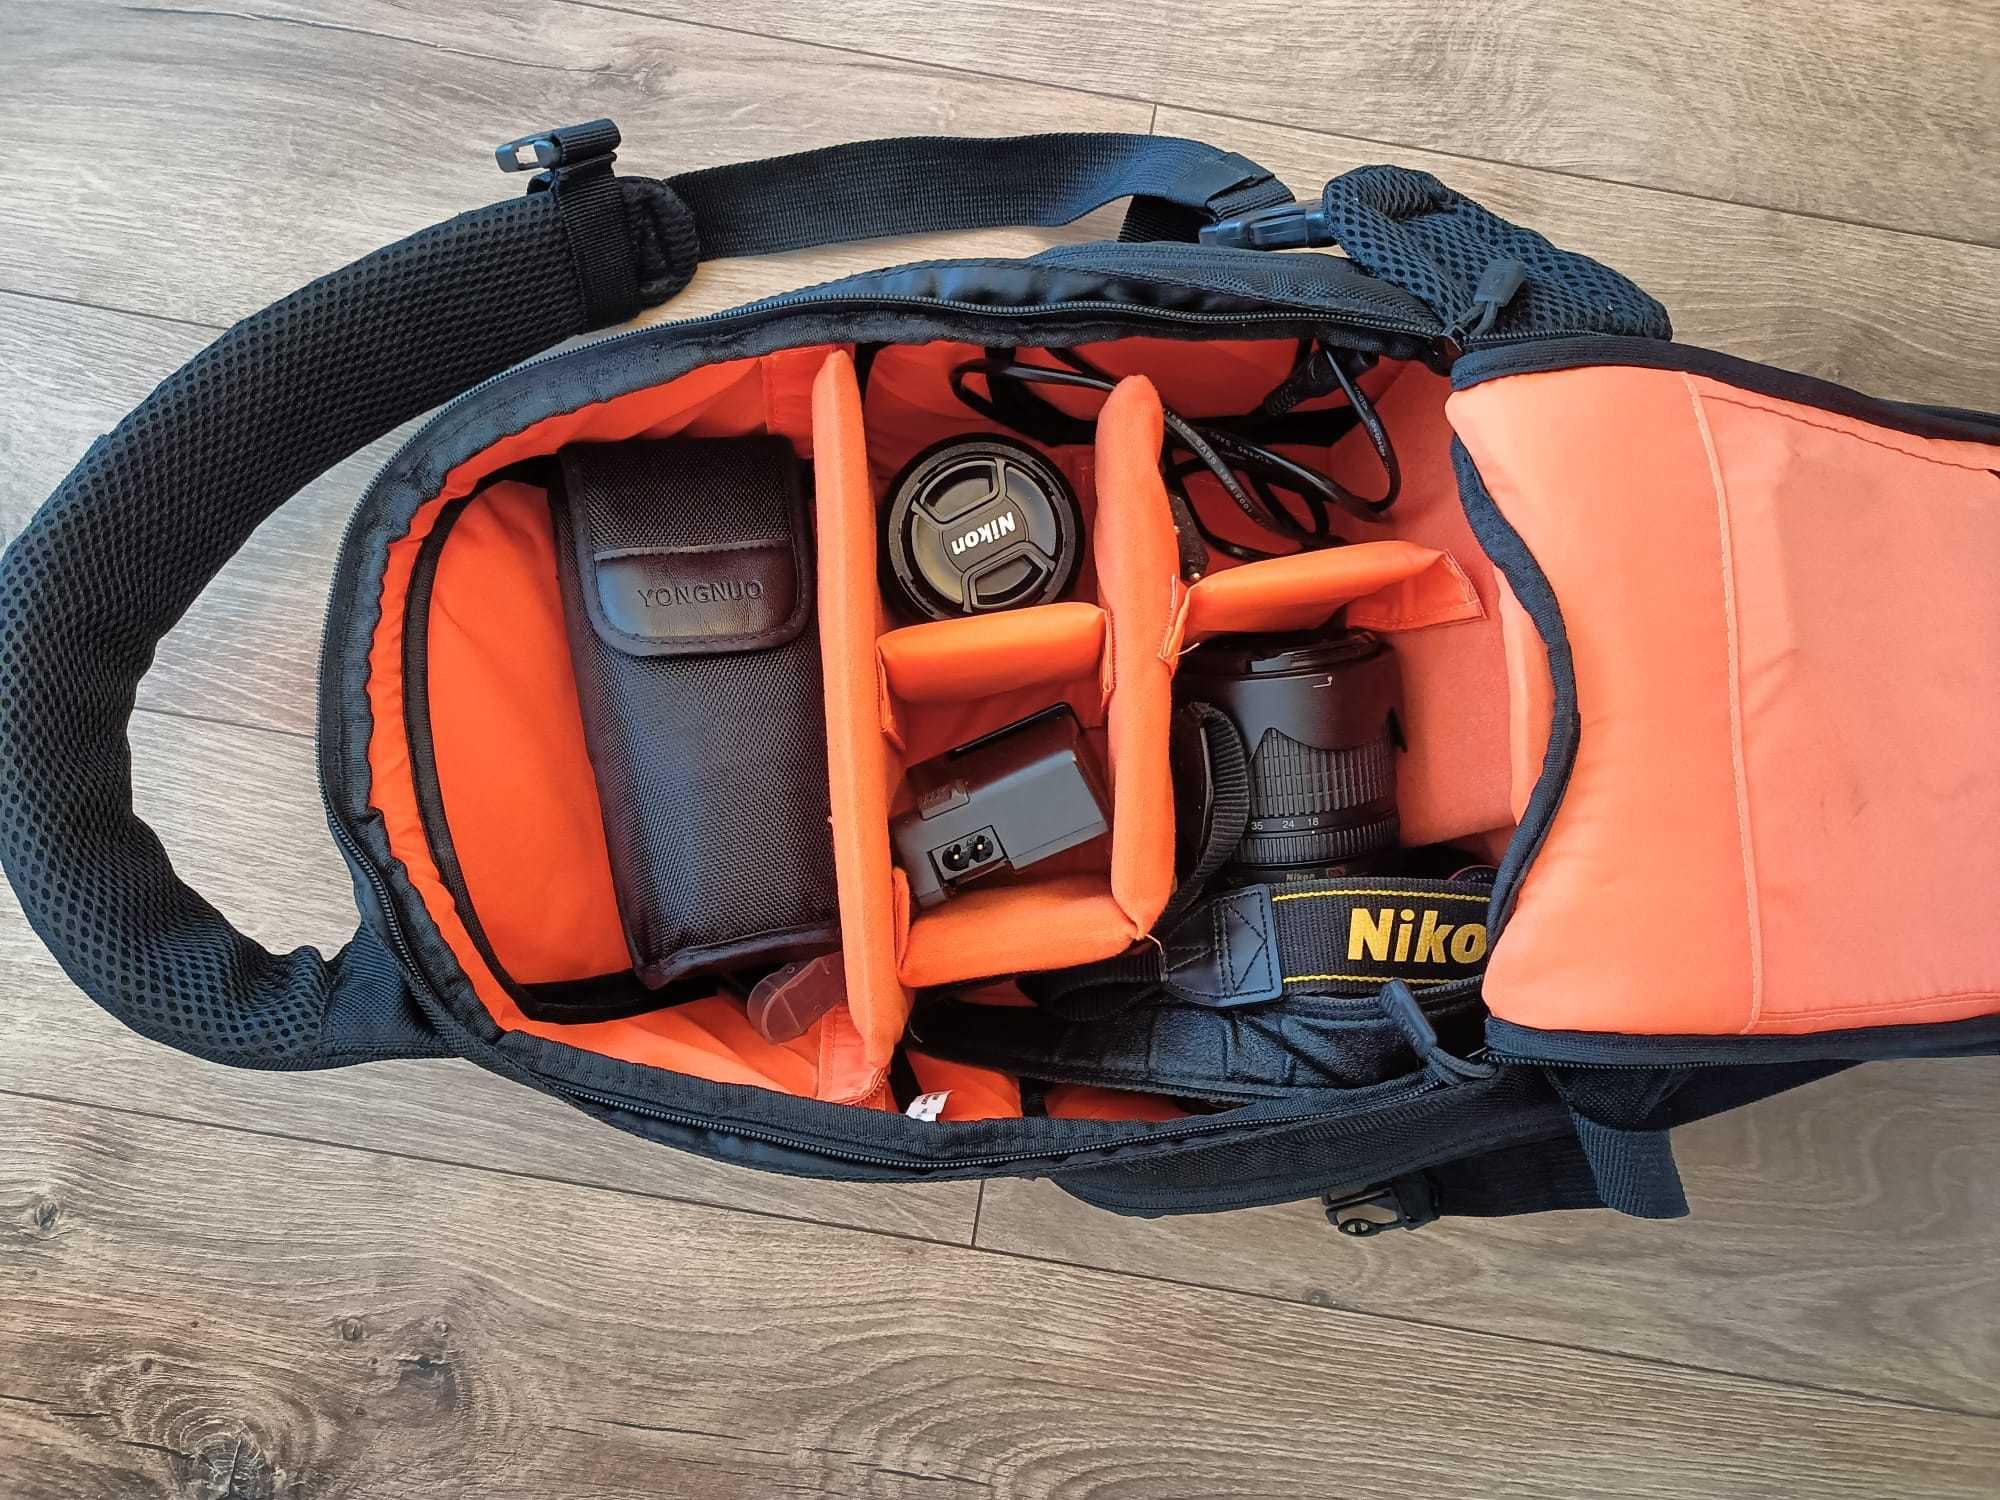 Nikon 7200 plus obiective,blitz si geanta transport